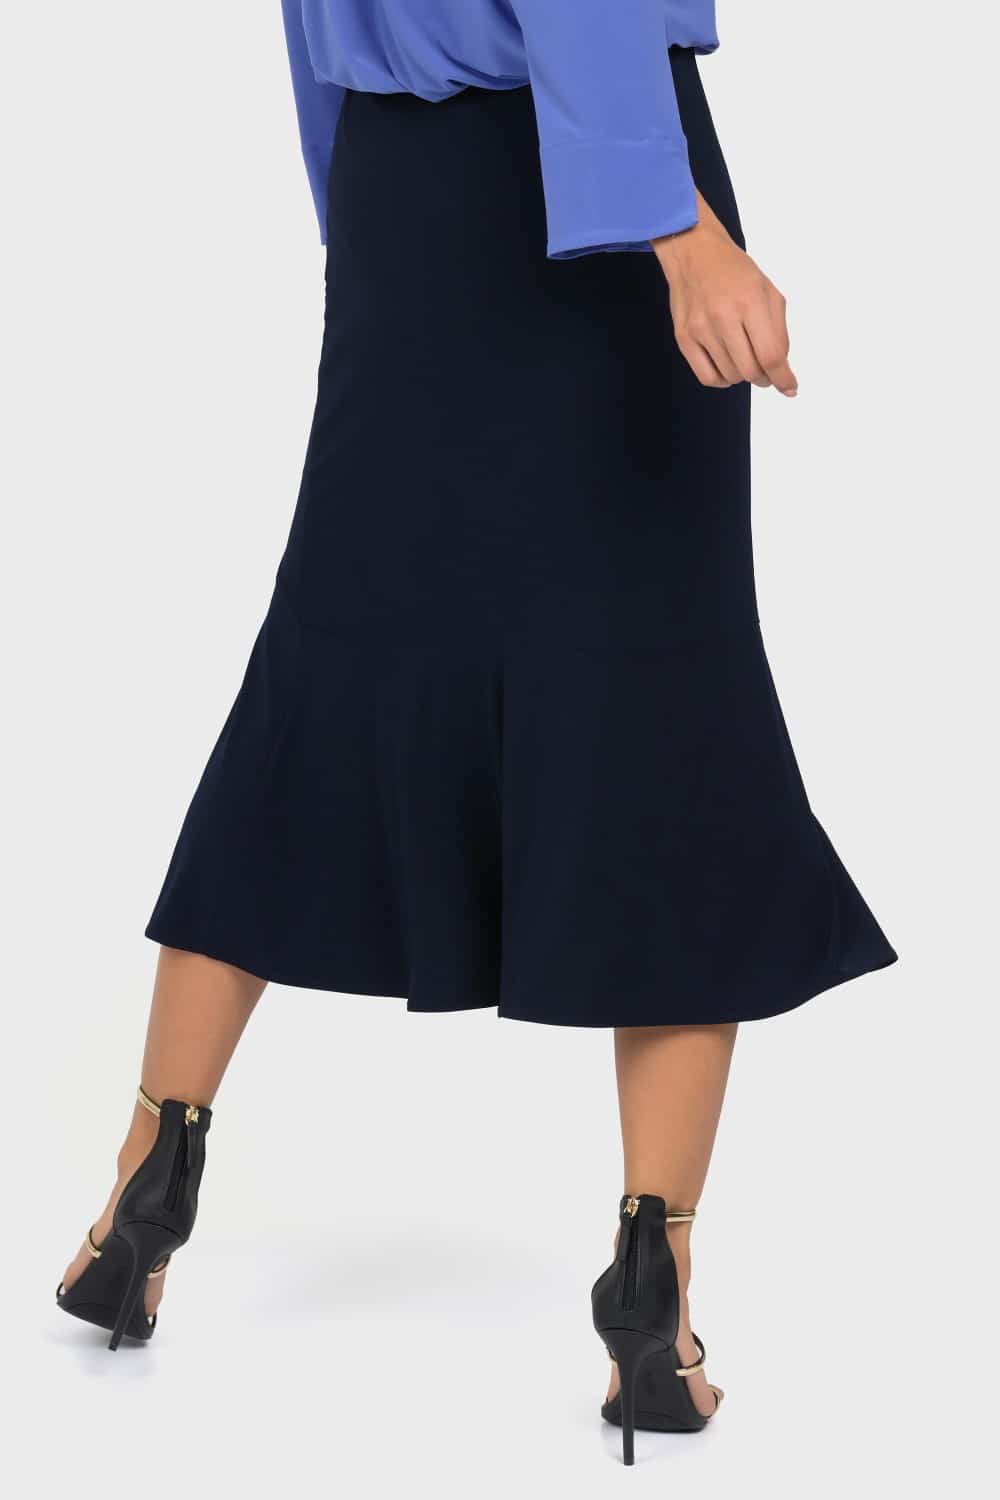 Joseph Ribkoff Skirt Style 191091 Blue Or Black – Belle Mia Boutique